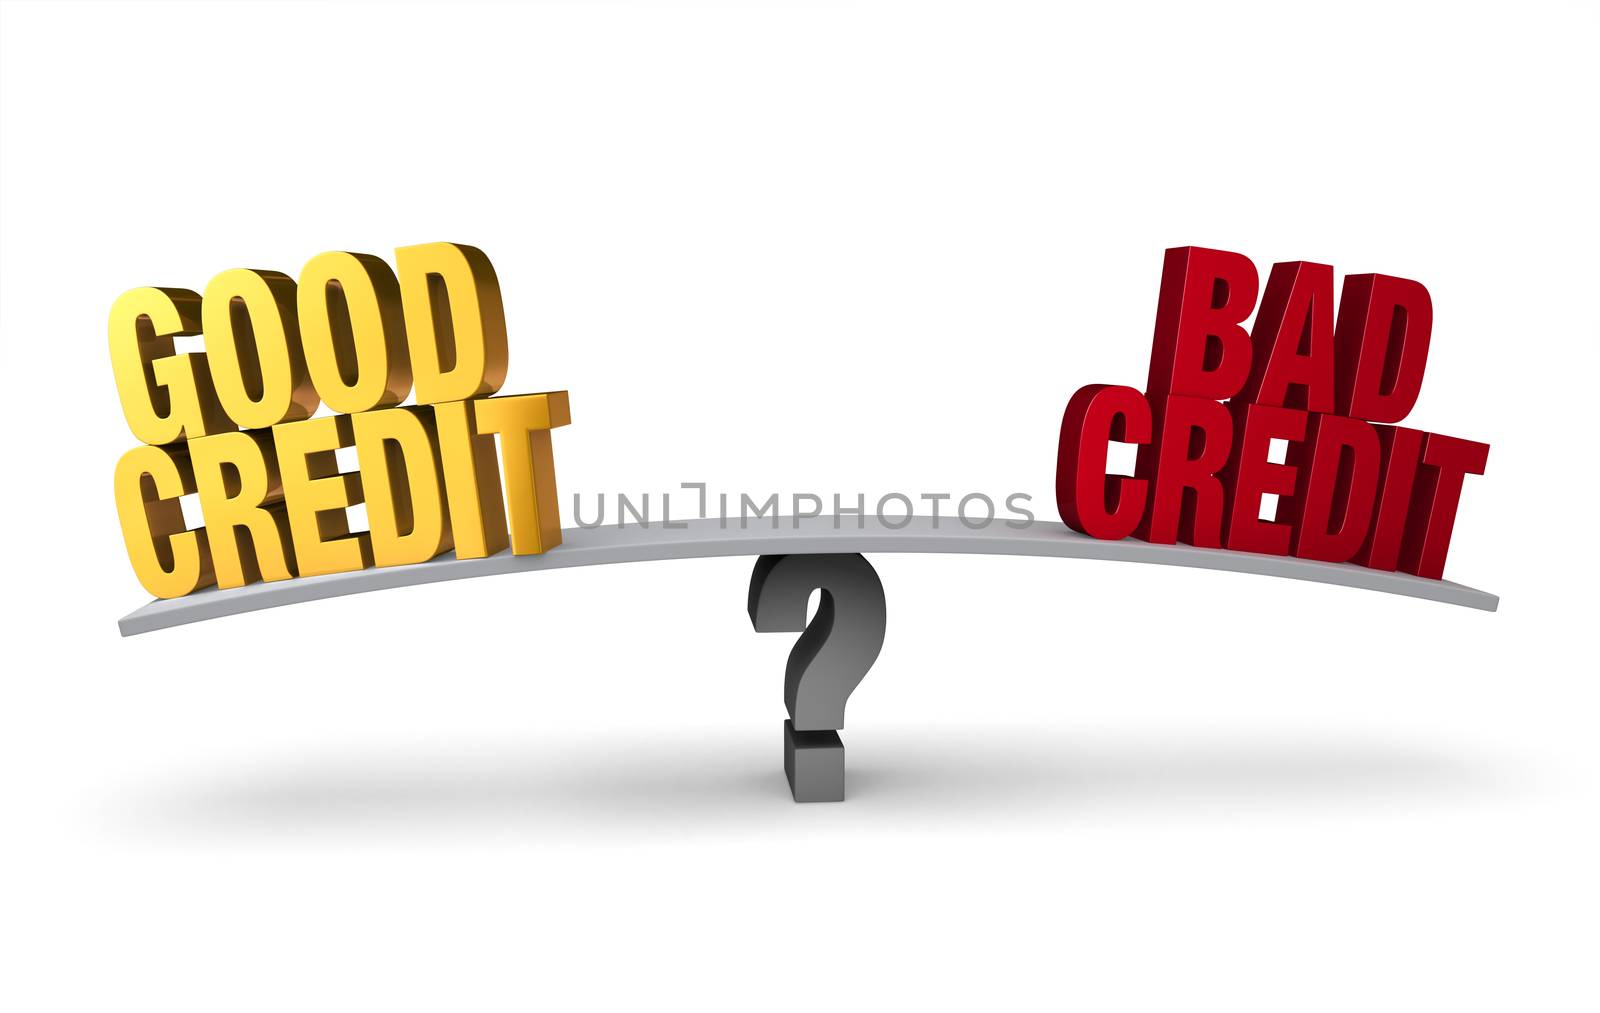 Good Credit Versus Bad Credit by Em3